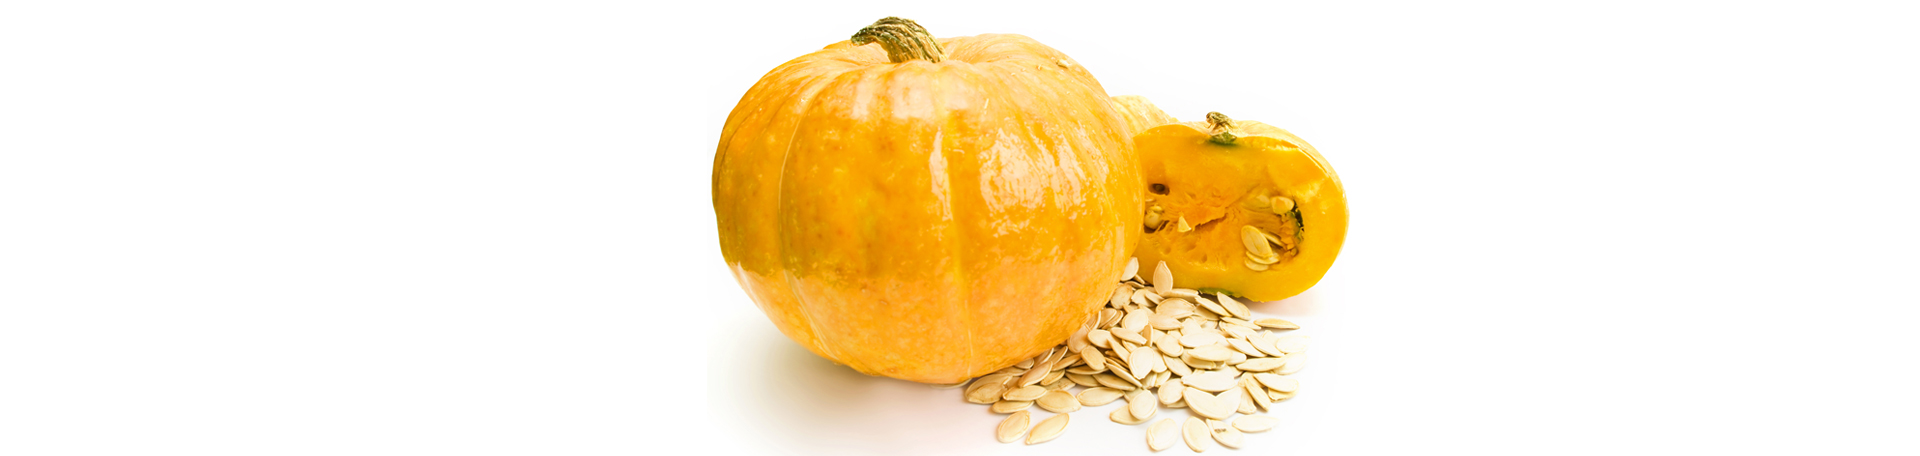 Nashua chiropractic nutrition info on the pumpkin